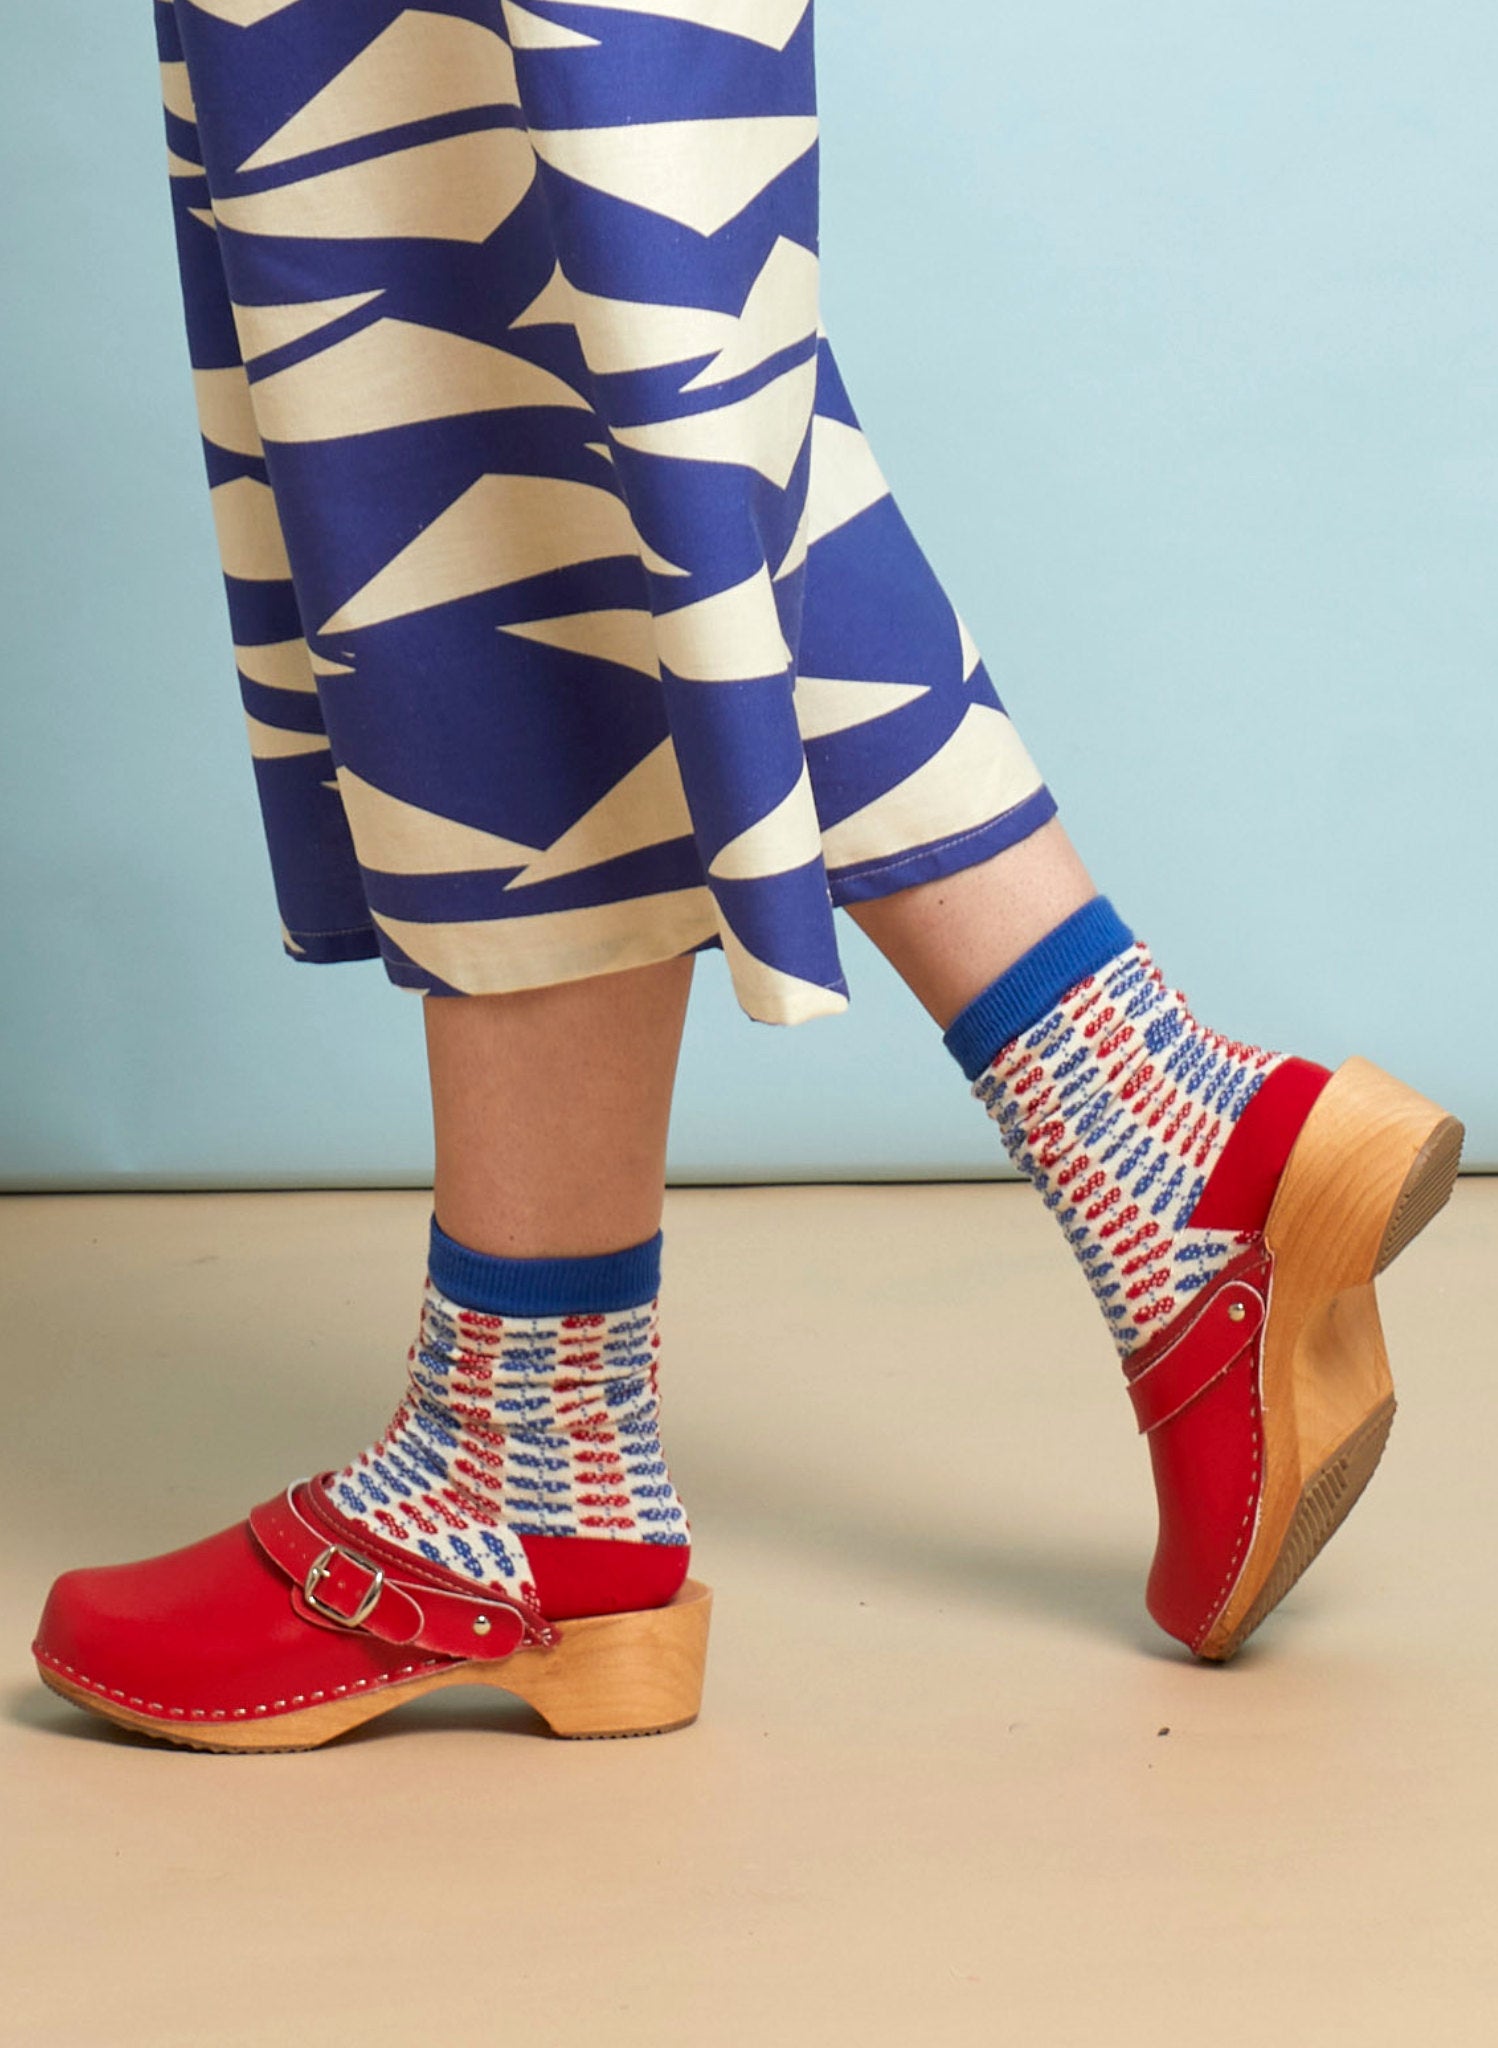 Ankle Socks - Tricolore Pinecone